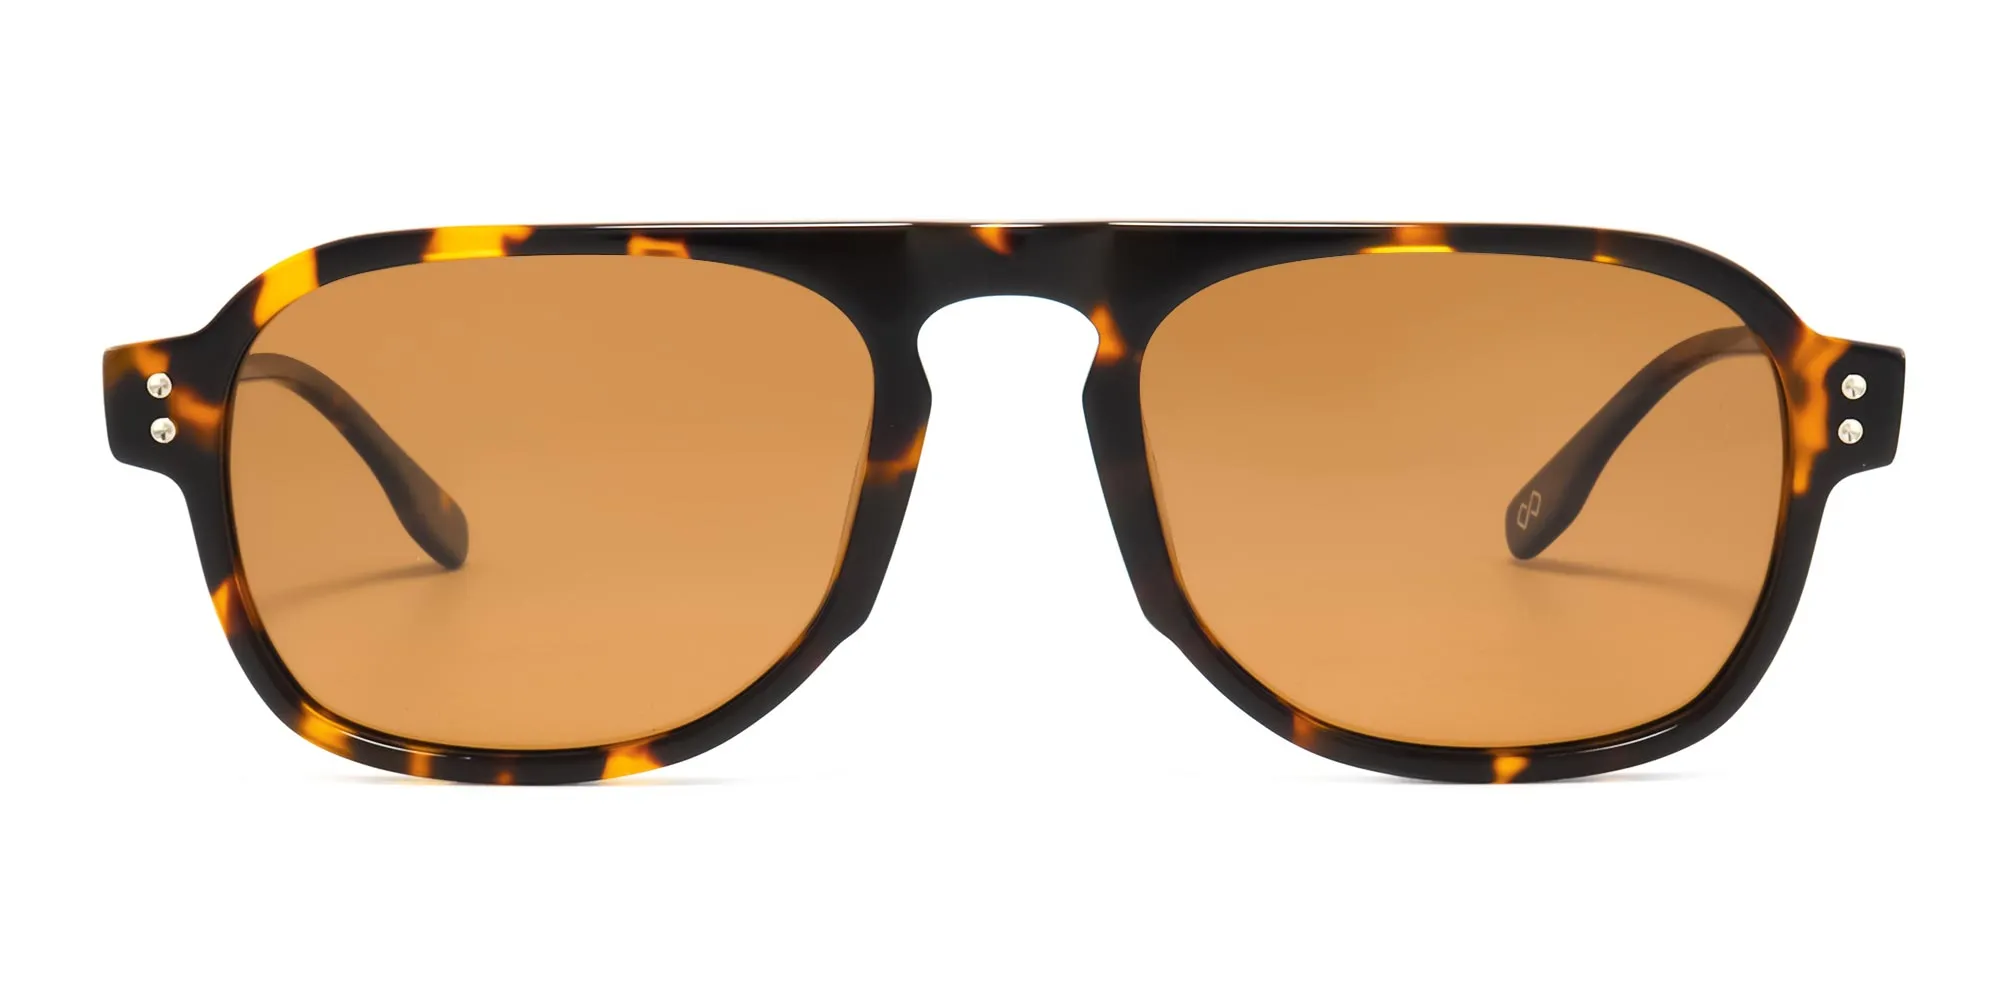 Brown Tint Tortoise Shell Sunglasses